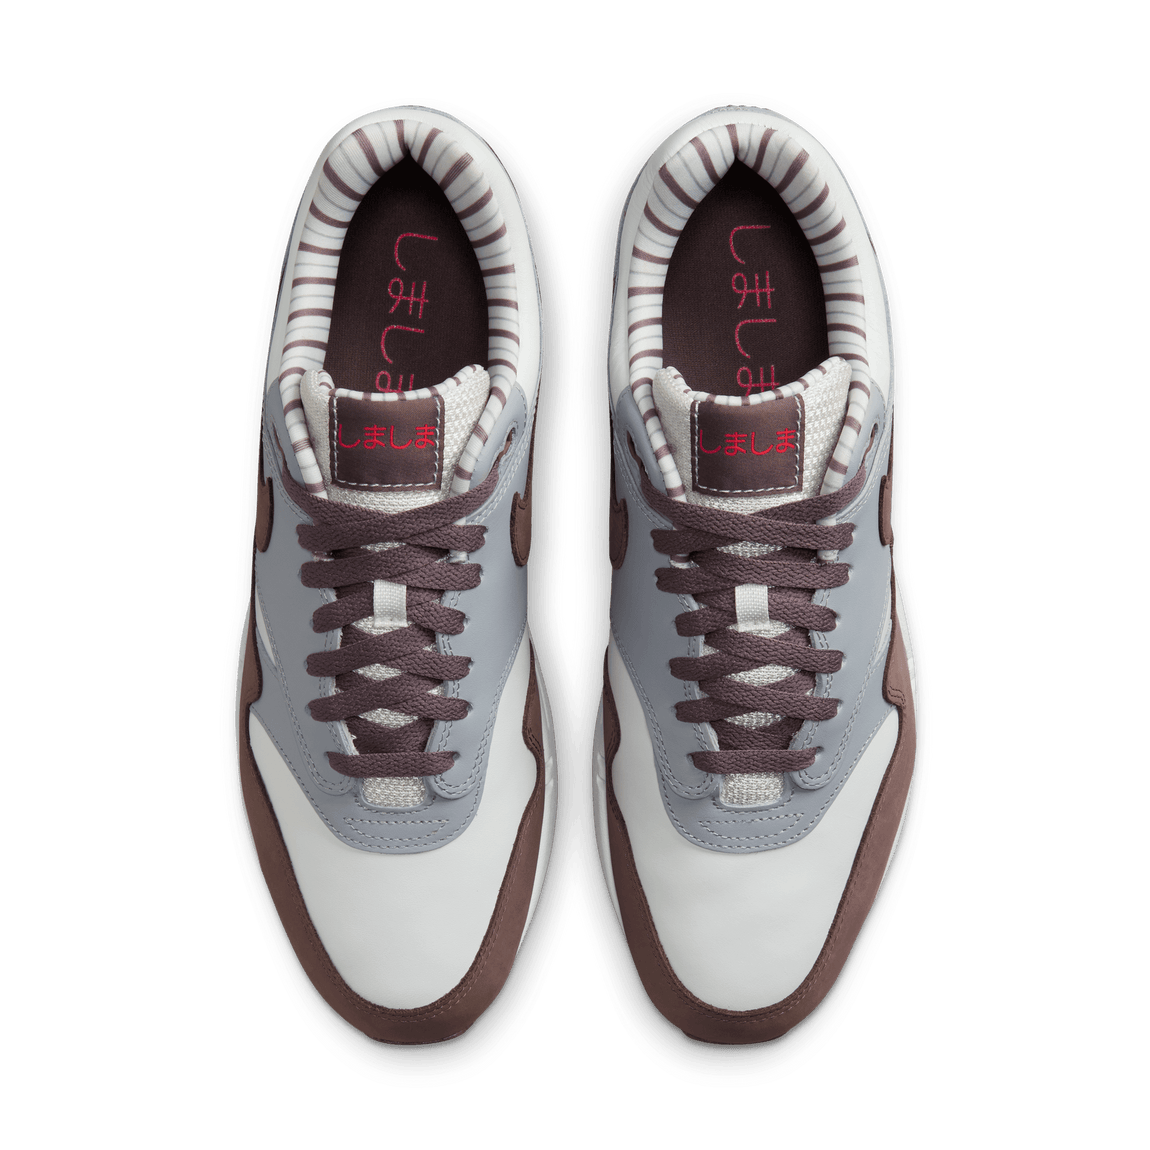 Nike Air Max 1 Premium 'Shima Shima' (Summit White/Plum Eclipse/Wolf Grey) - Nike Air Max 1 Premium 'Shima Shima' (Summit White/Plum Eclipse/Wolf Grey) - 